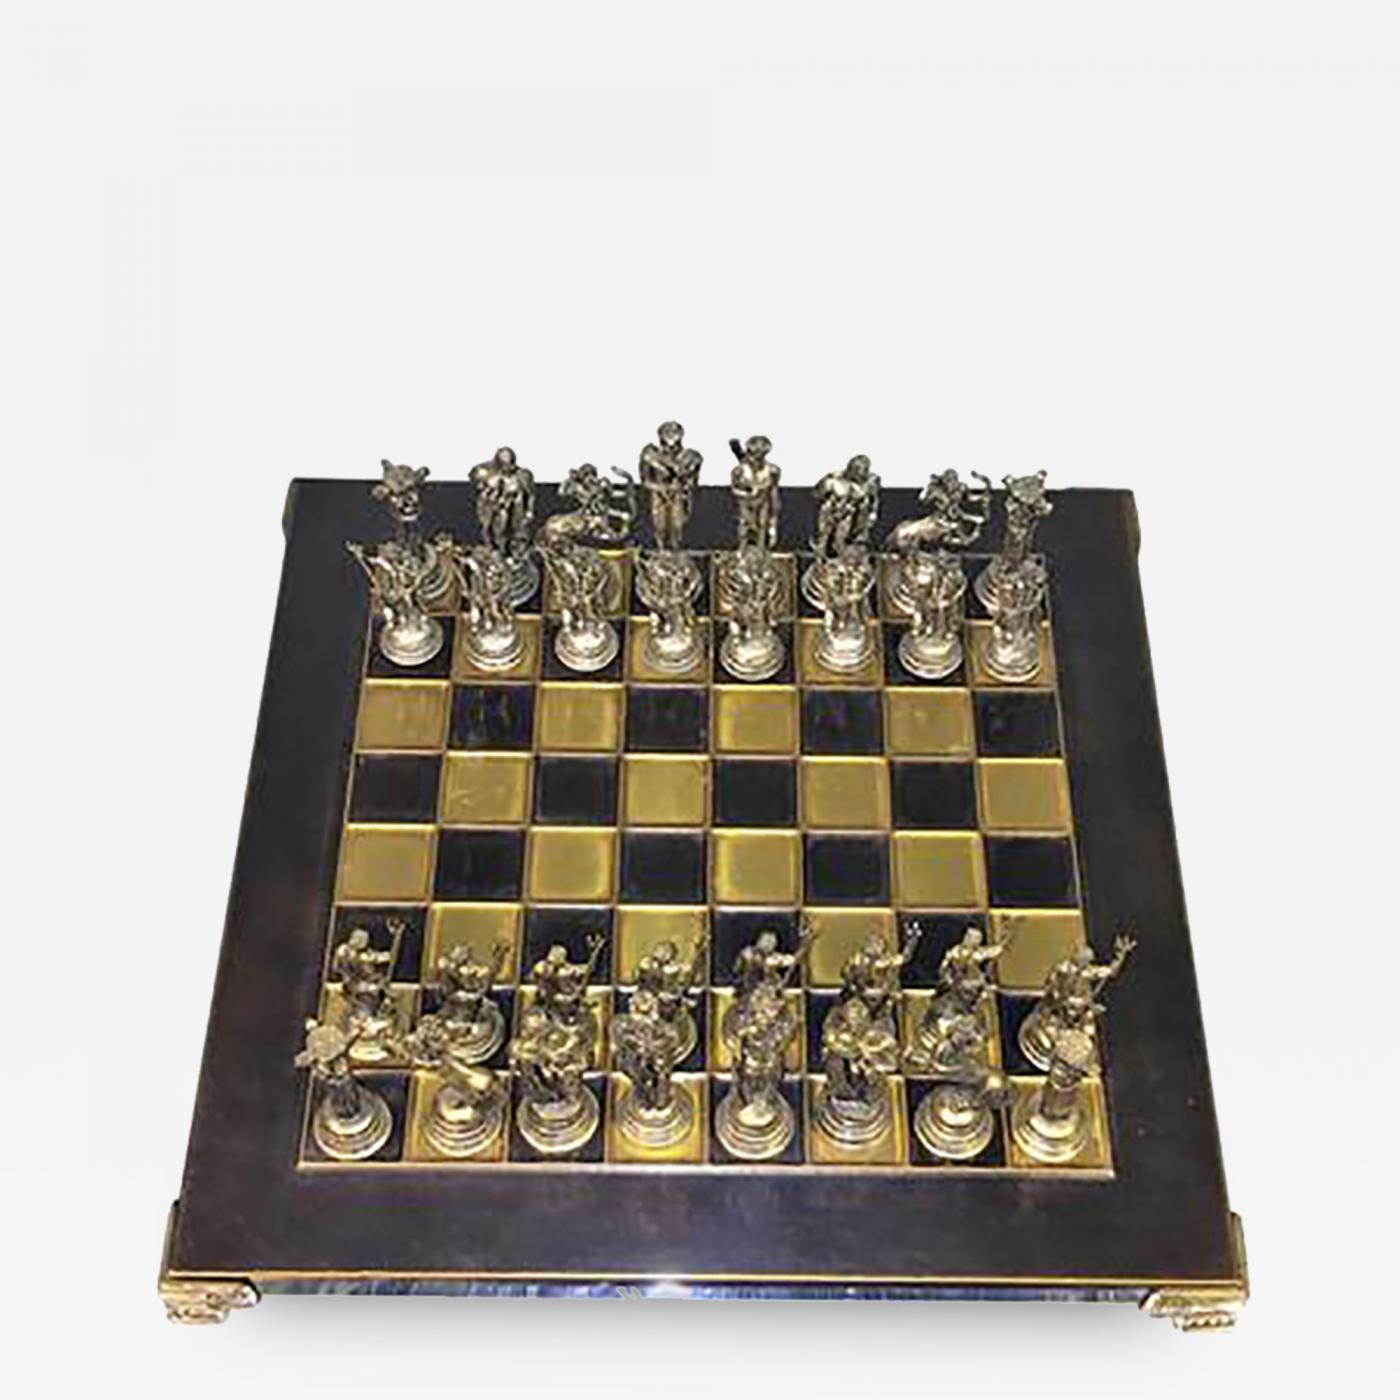 modern chess set nyc